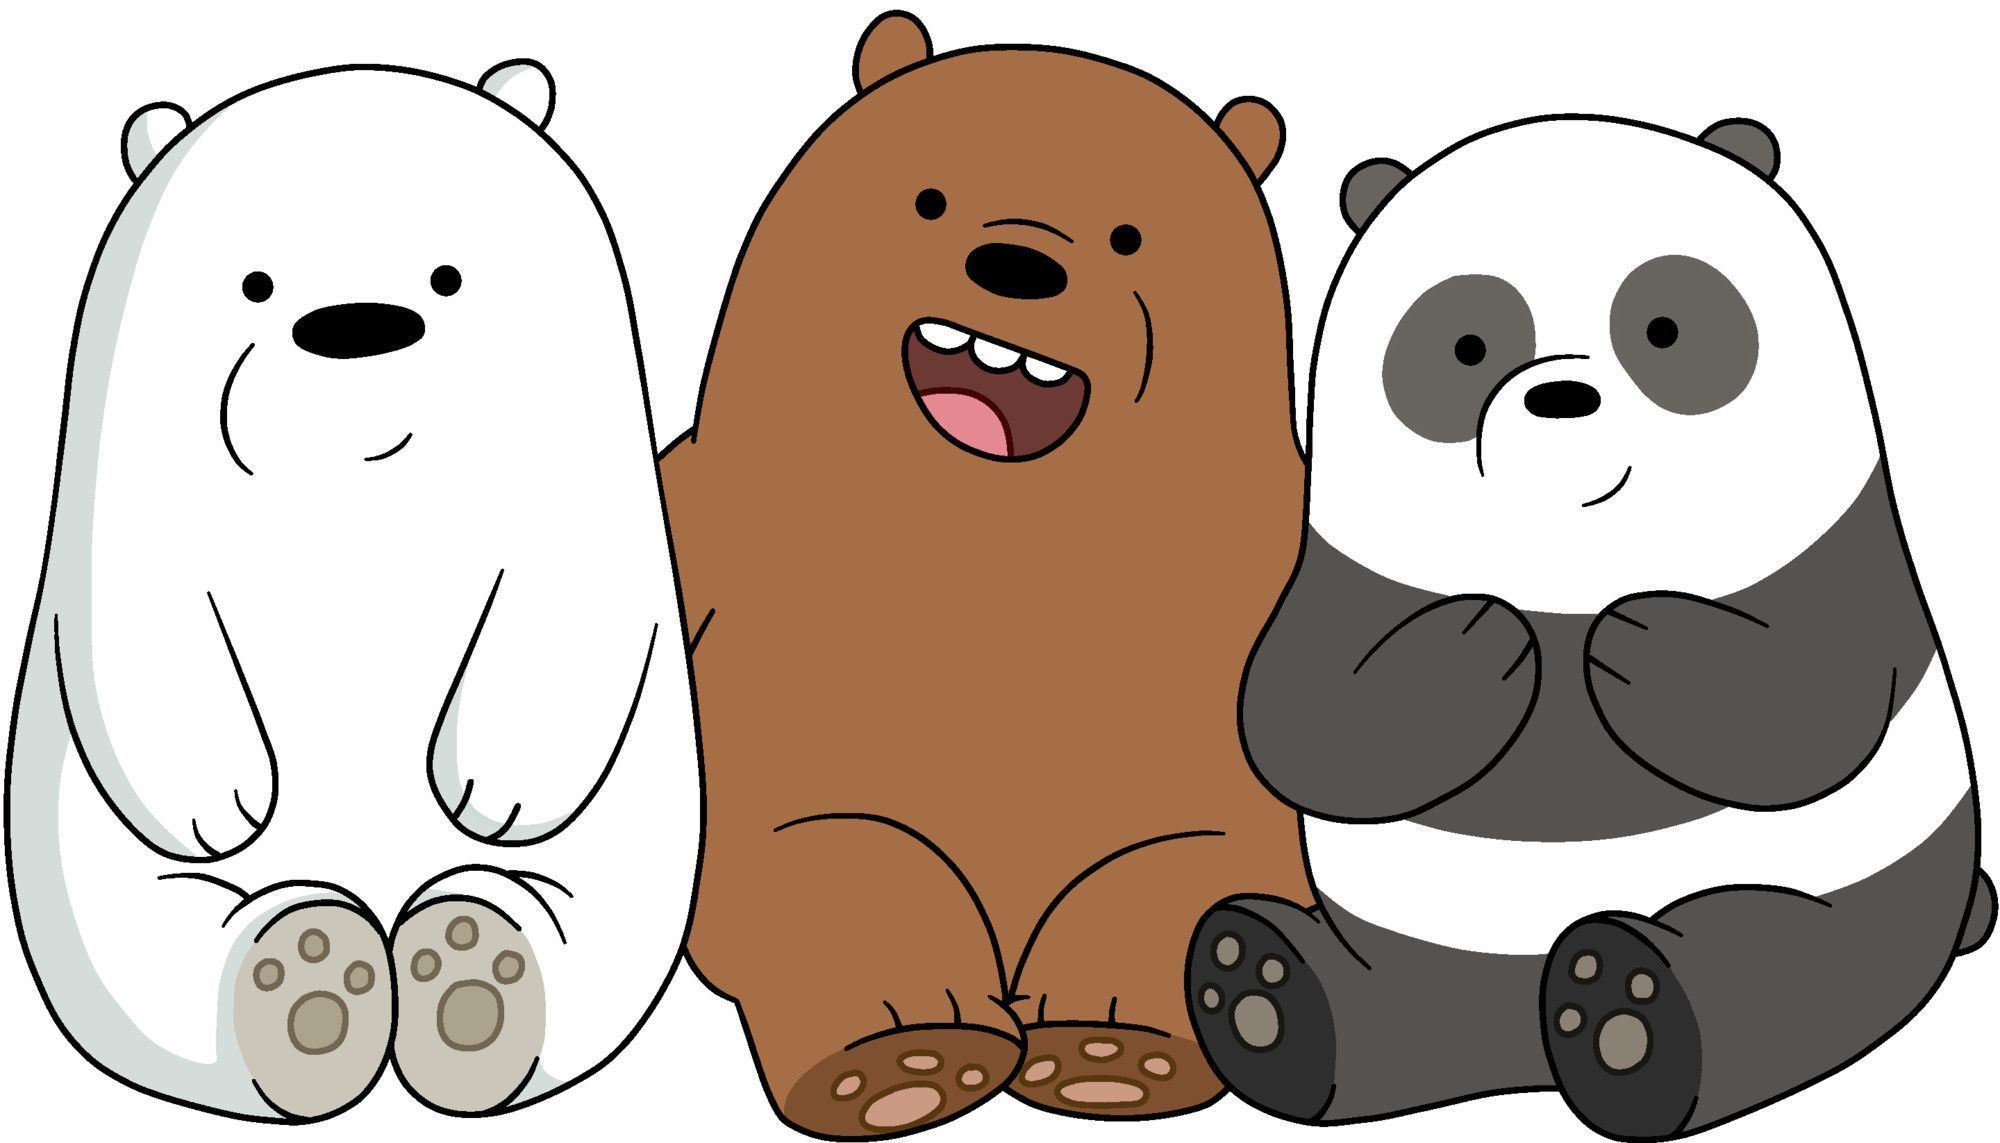 A cartoon bear, panda and polarbear are sitting together - We Bare Bears